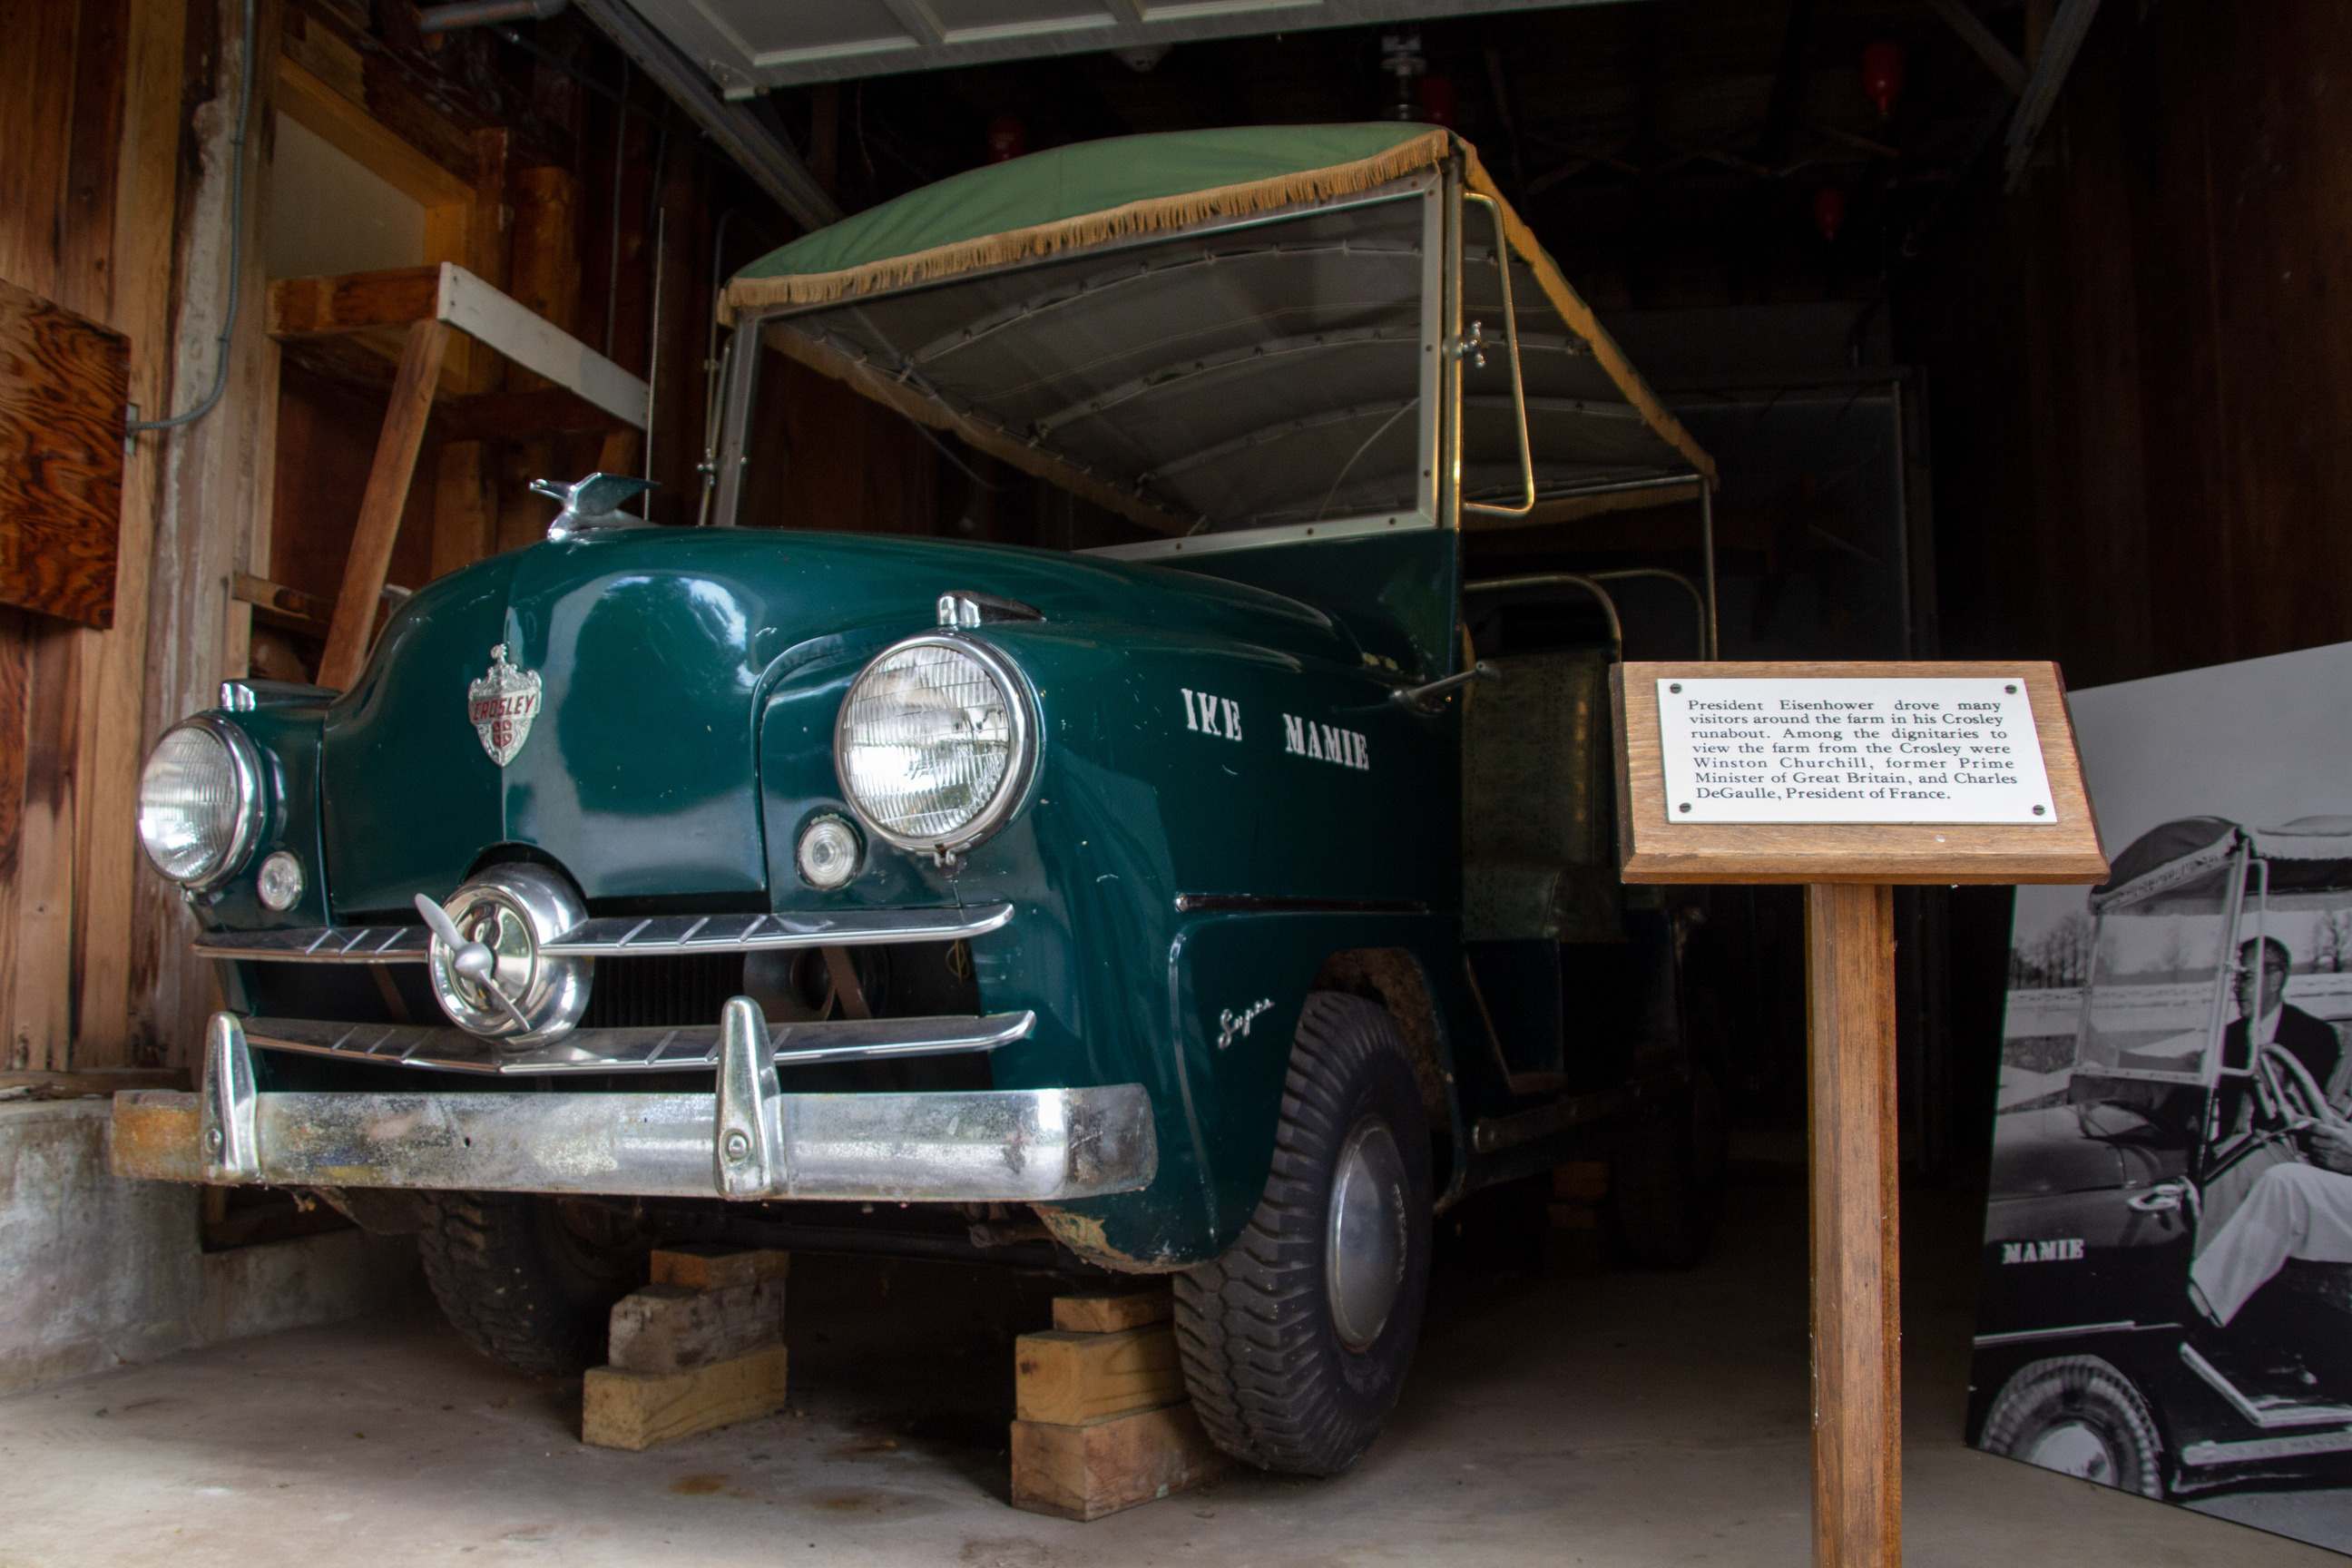 A historic car in a garage.